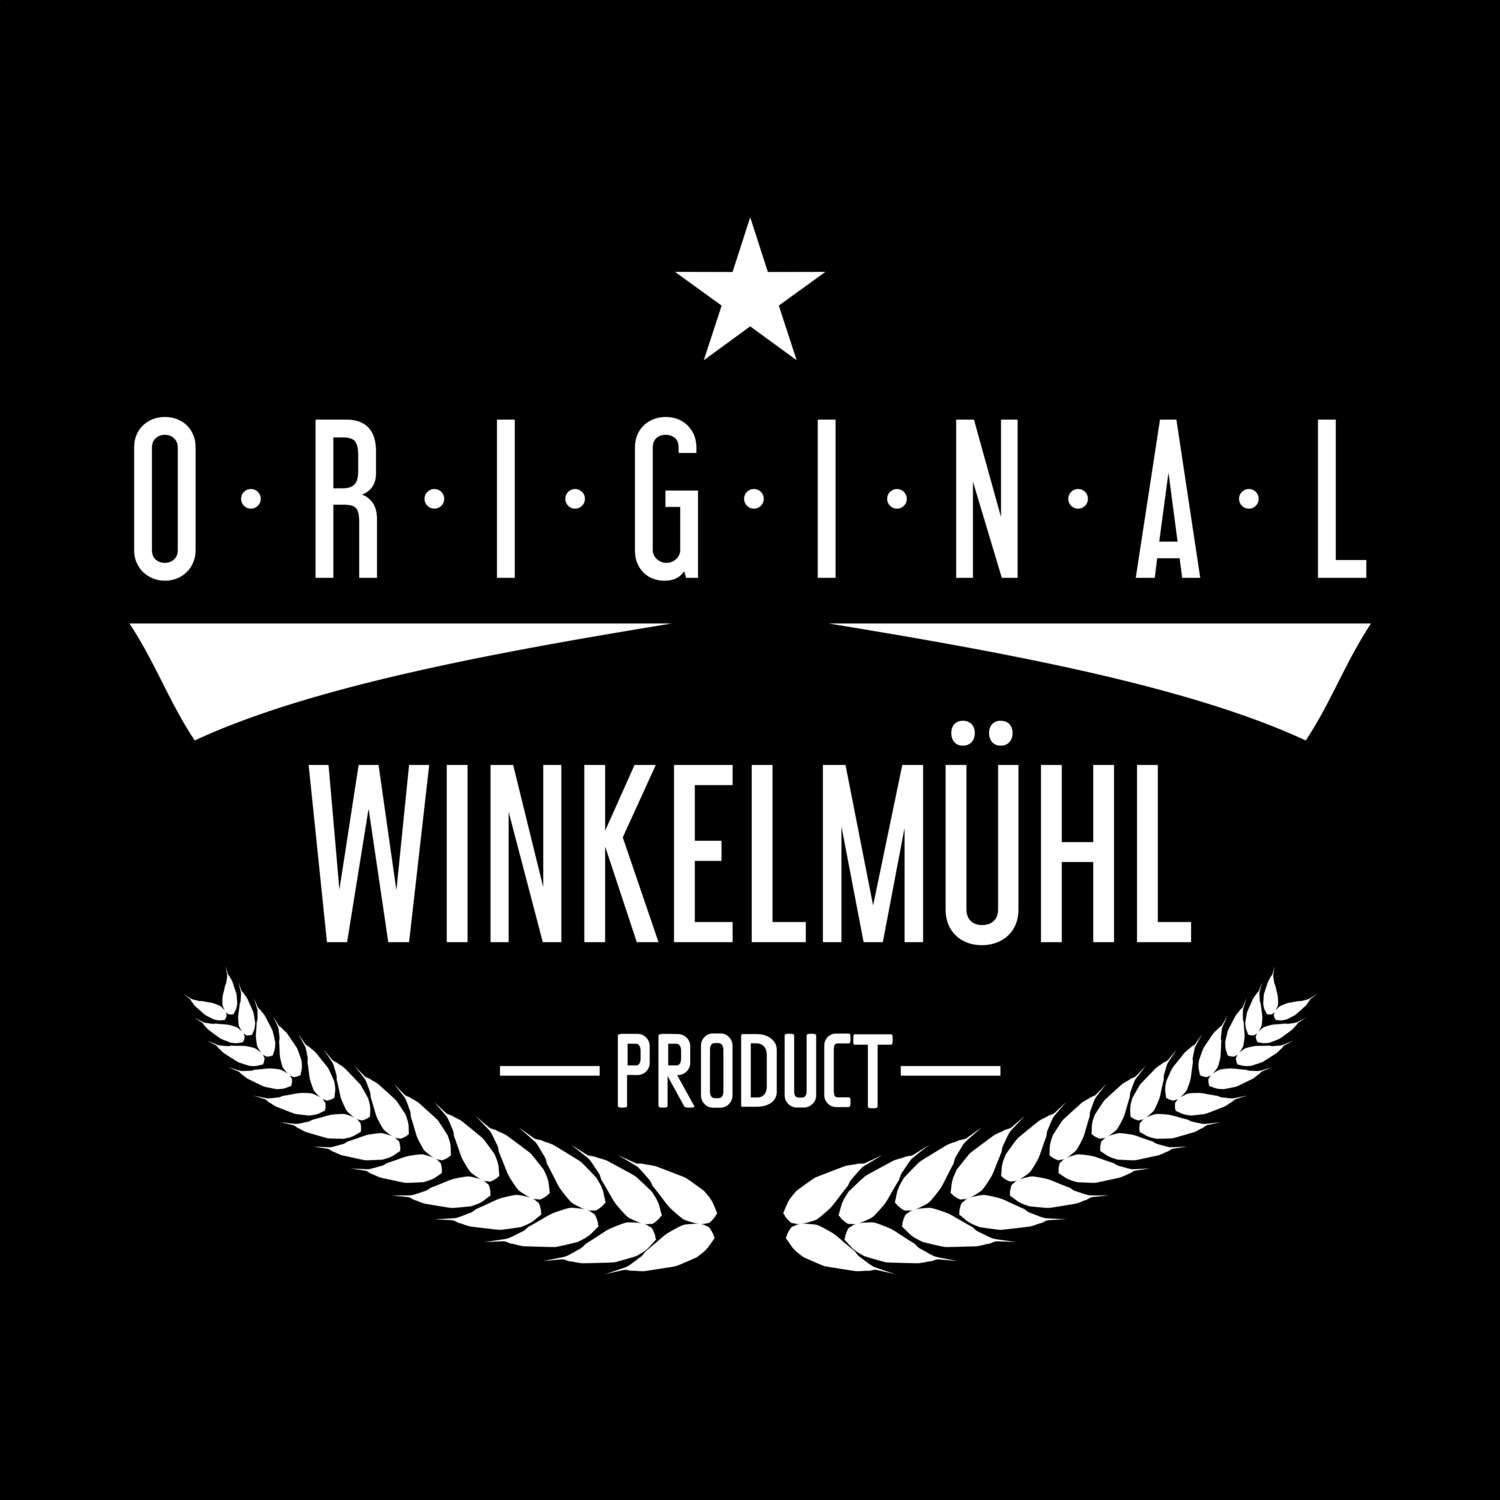 Winkelmühl T-Shirt »Original Product«